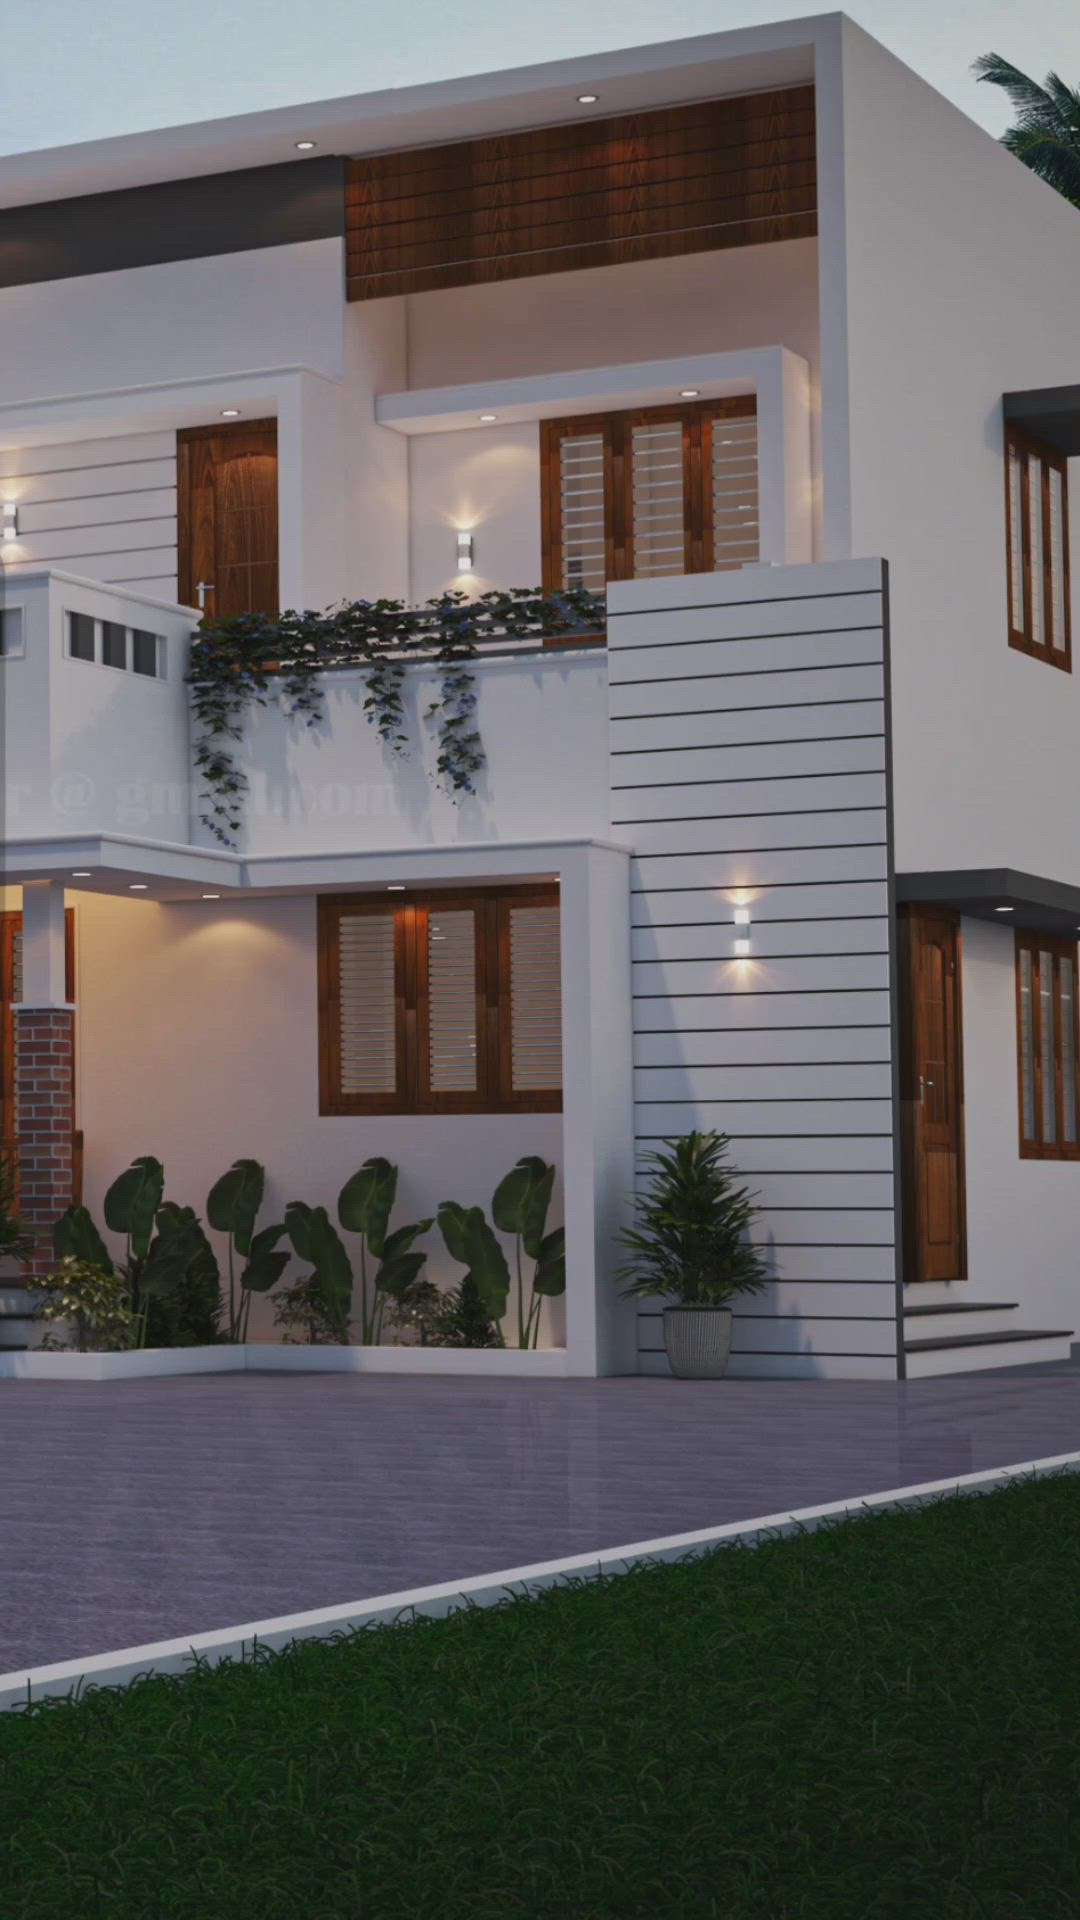 3d home visualization

( നിങ്ങളുടെ കയ്യിലുള്ള പ്ലാൻ അനുസരിച്ചുള്ള 3d ഡിസൈൻ ചെയ്യാൻ contact ചെയ്യൂ......)
Contact : 9567748403

#kerala #residence #3ddesigns #online3d #keralahome #architecture #architecture_hunter #architecturephotography #architecturedesign #architecturelovers ##keraladesign #malappuram #palakkad #calicut #kannur #kollam #thrissur #edappal #wayanad #manjeri #chemmad #indianarchitecturekerala